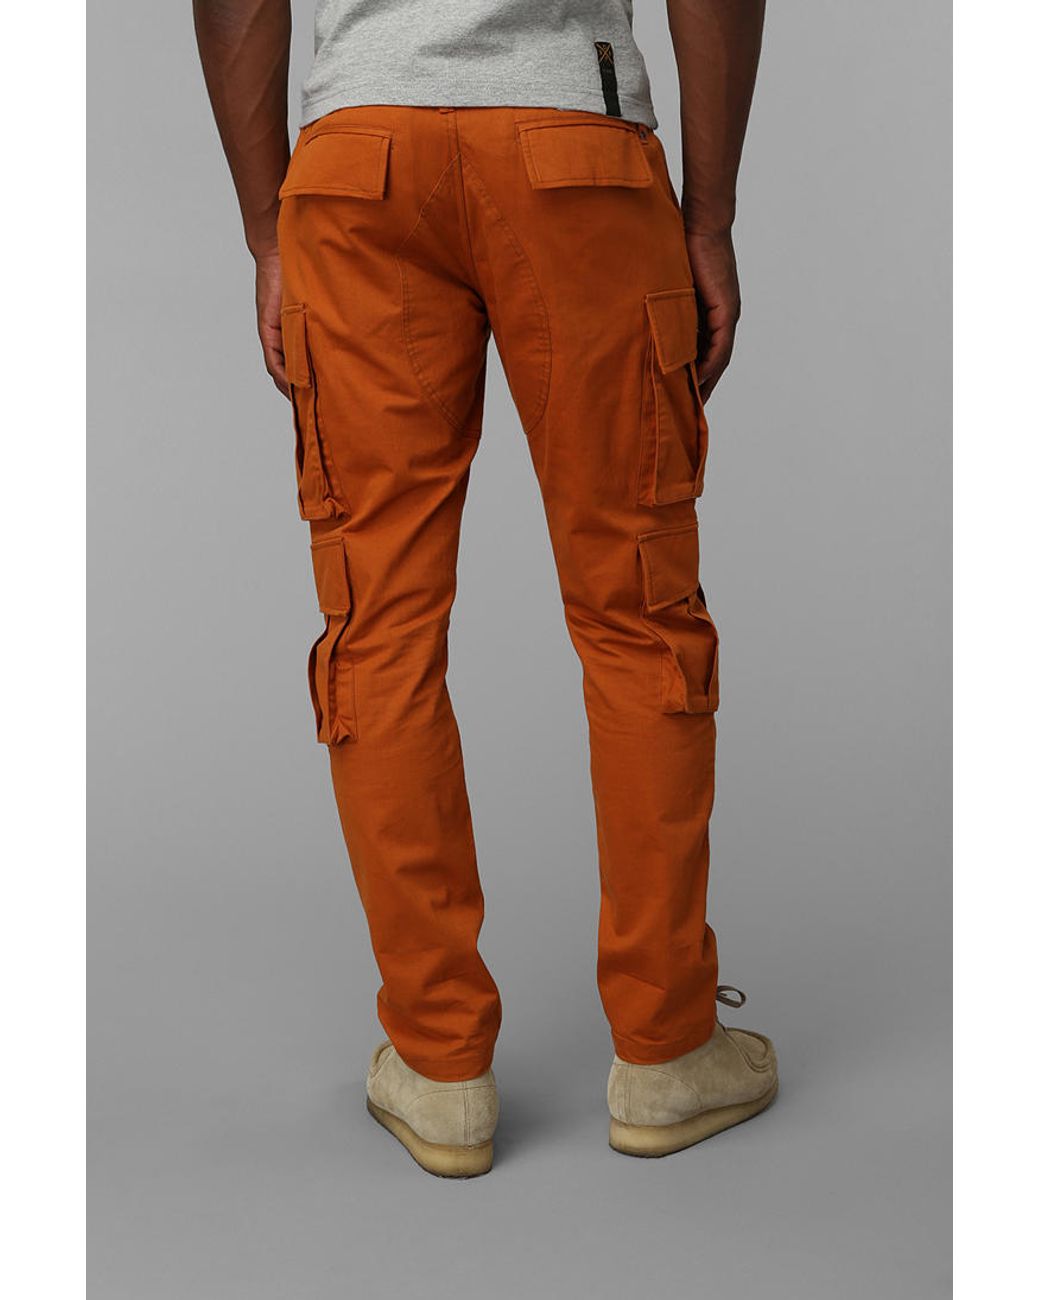 Men's Orange Pants